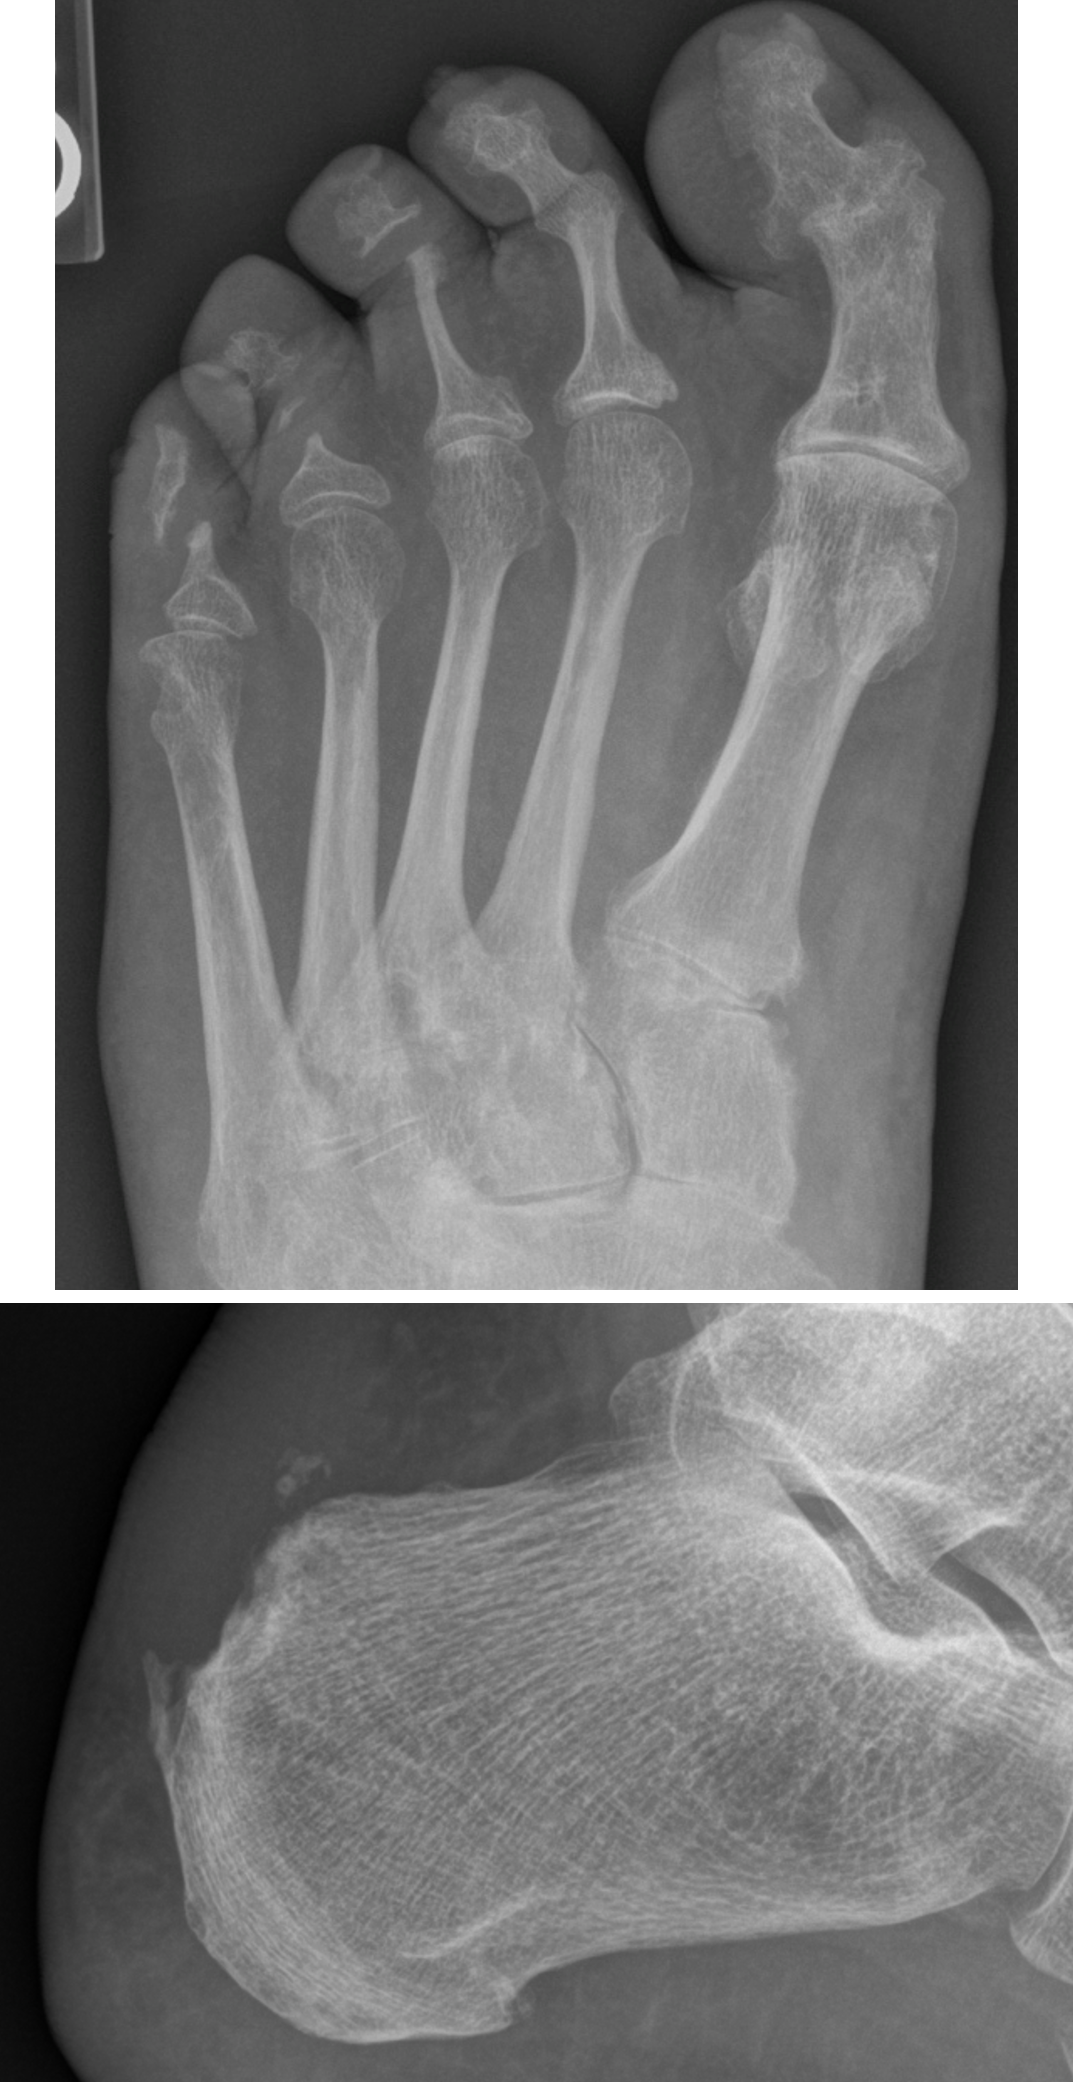 Foot Inflammatory Arthritis 2